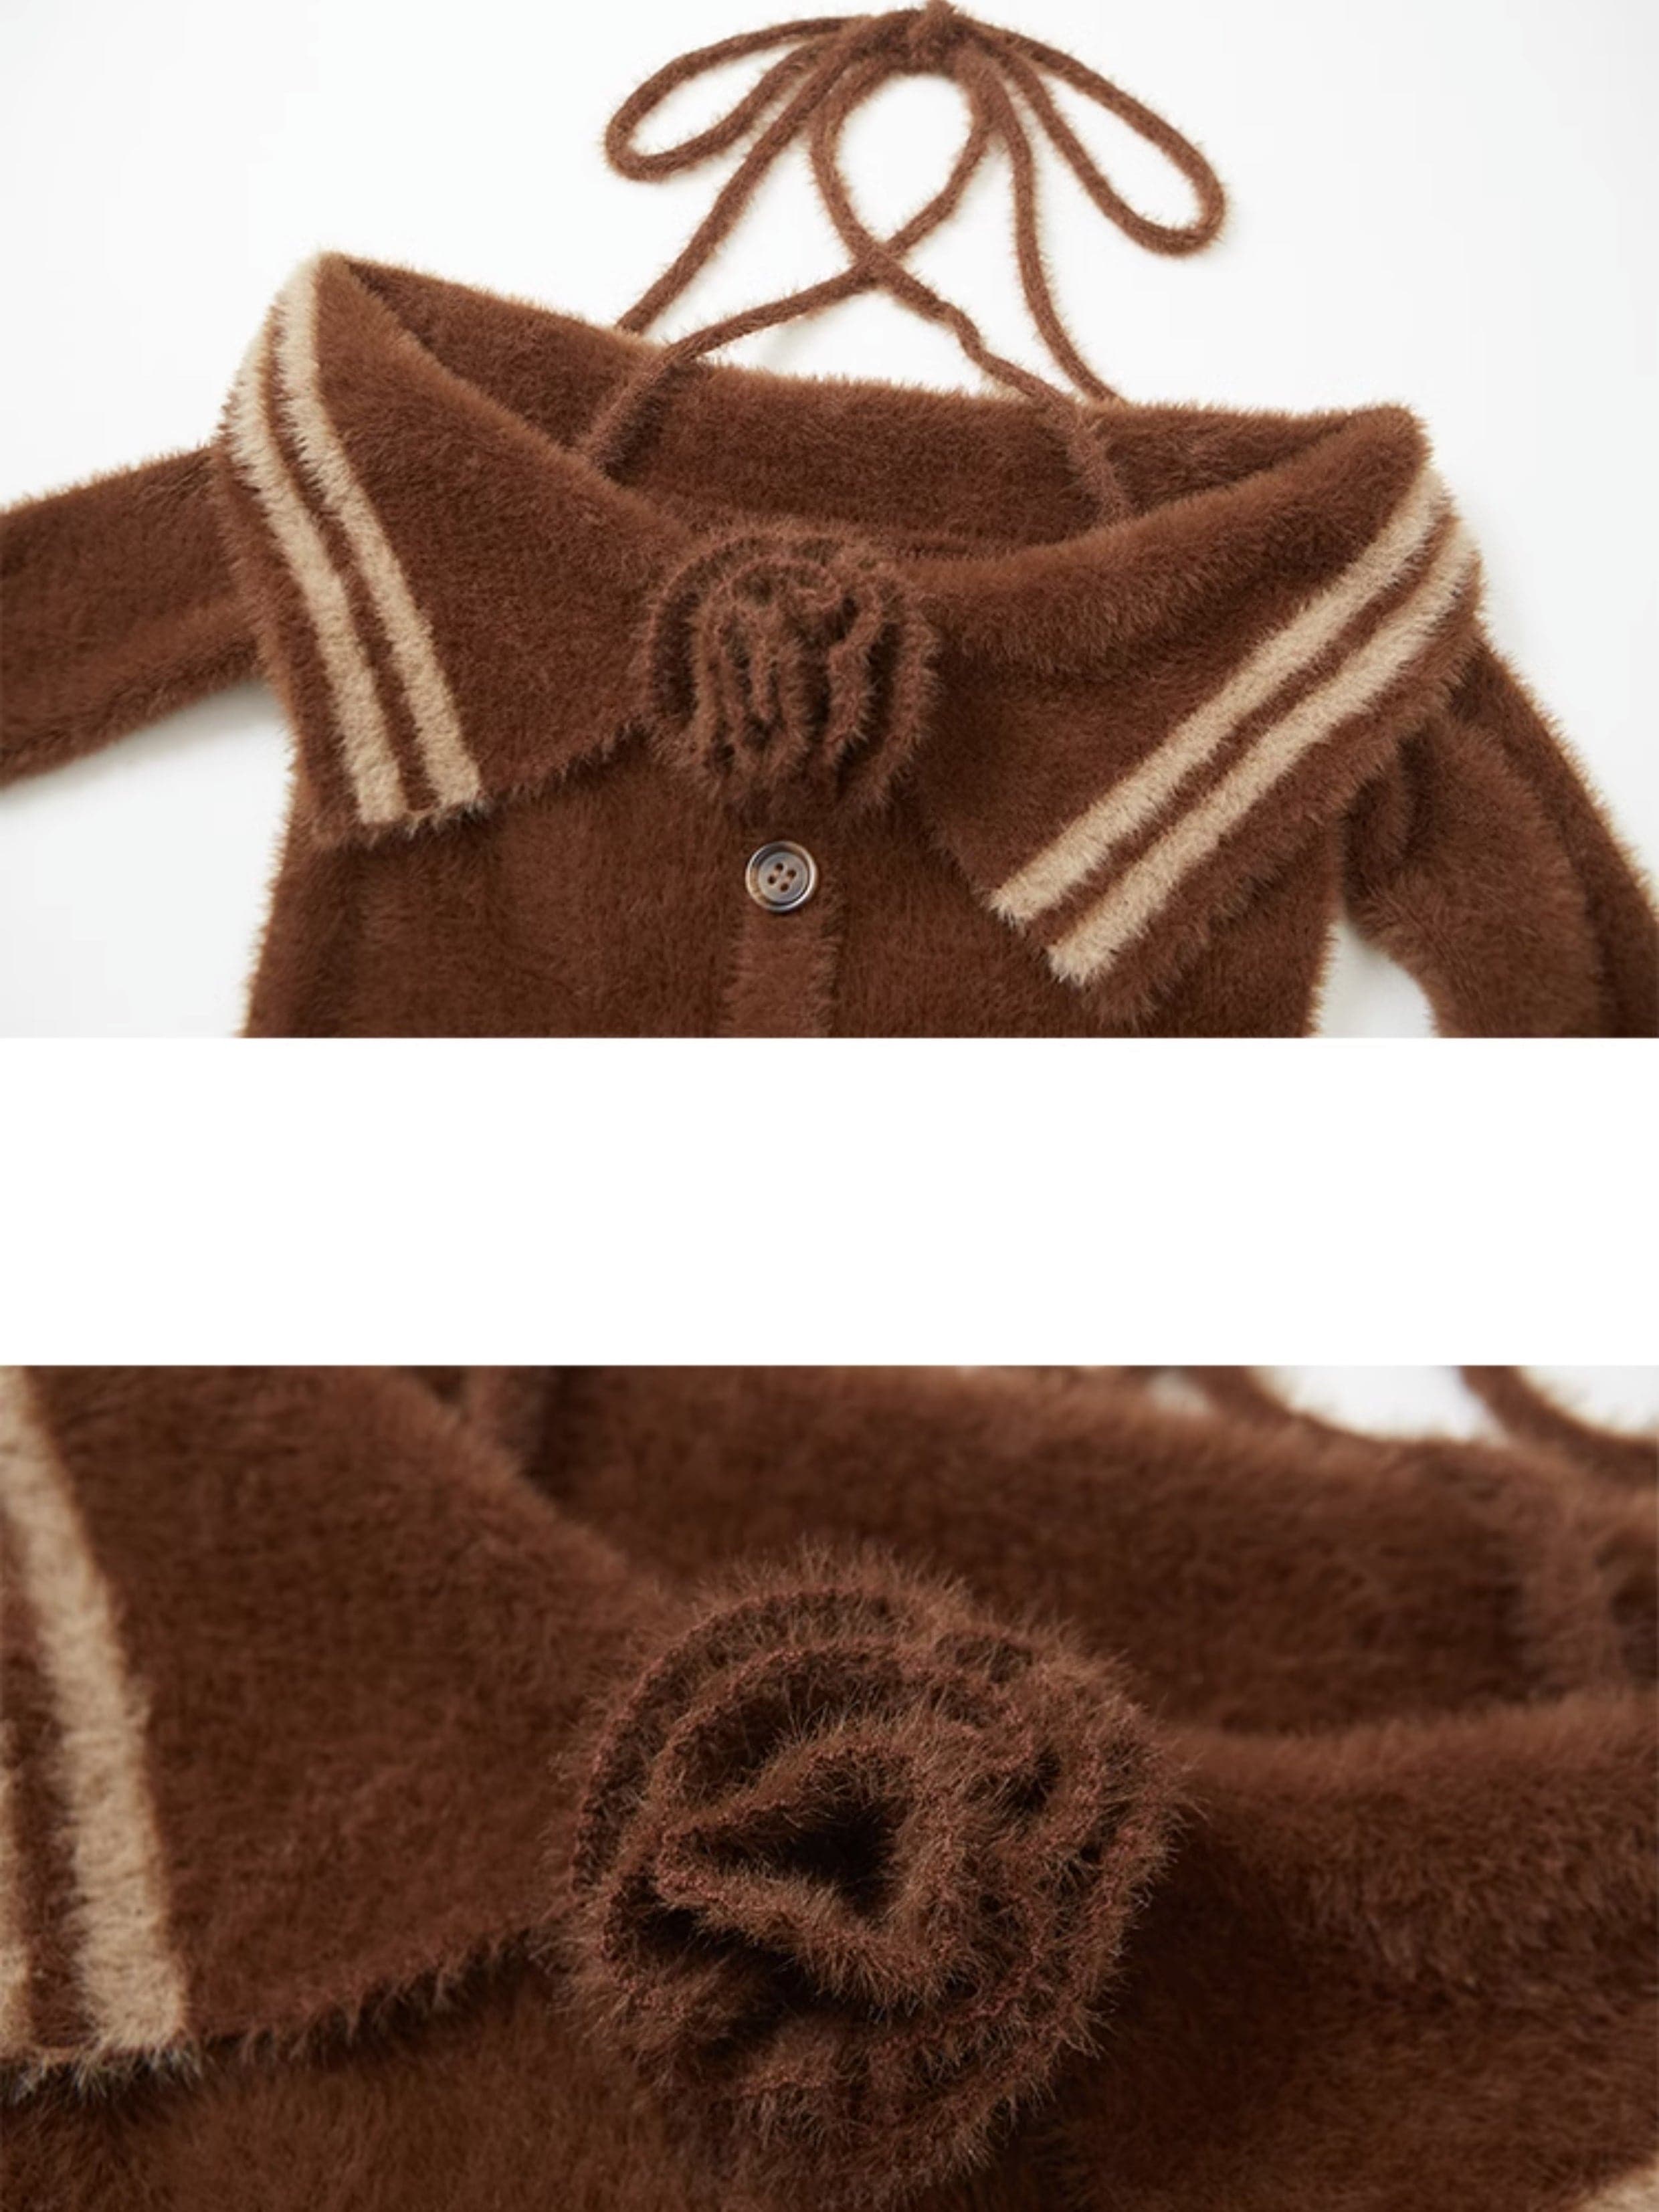 Cross Strap One-Shoulder Sweater - chiclara